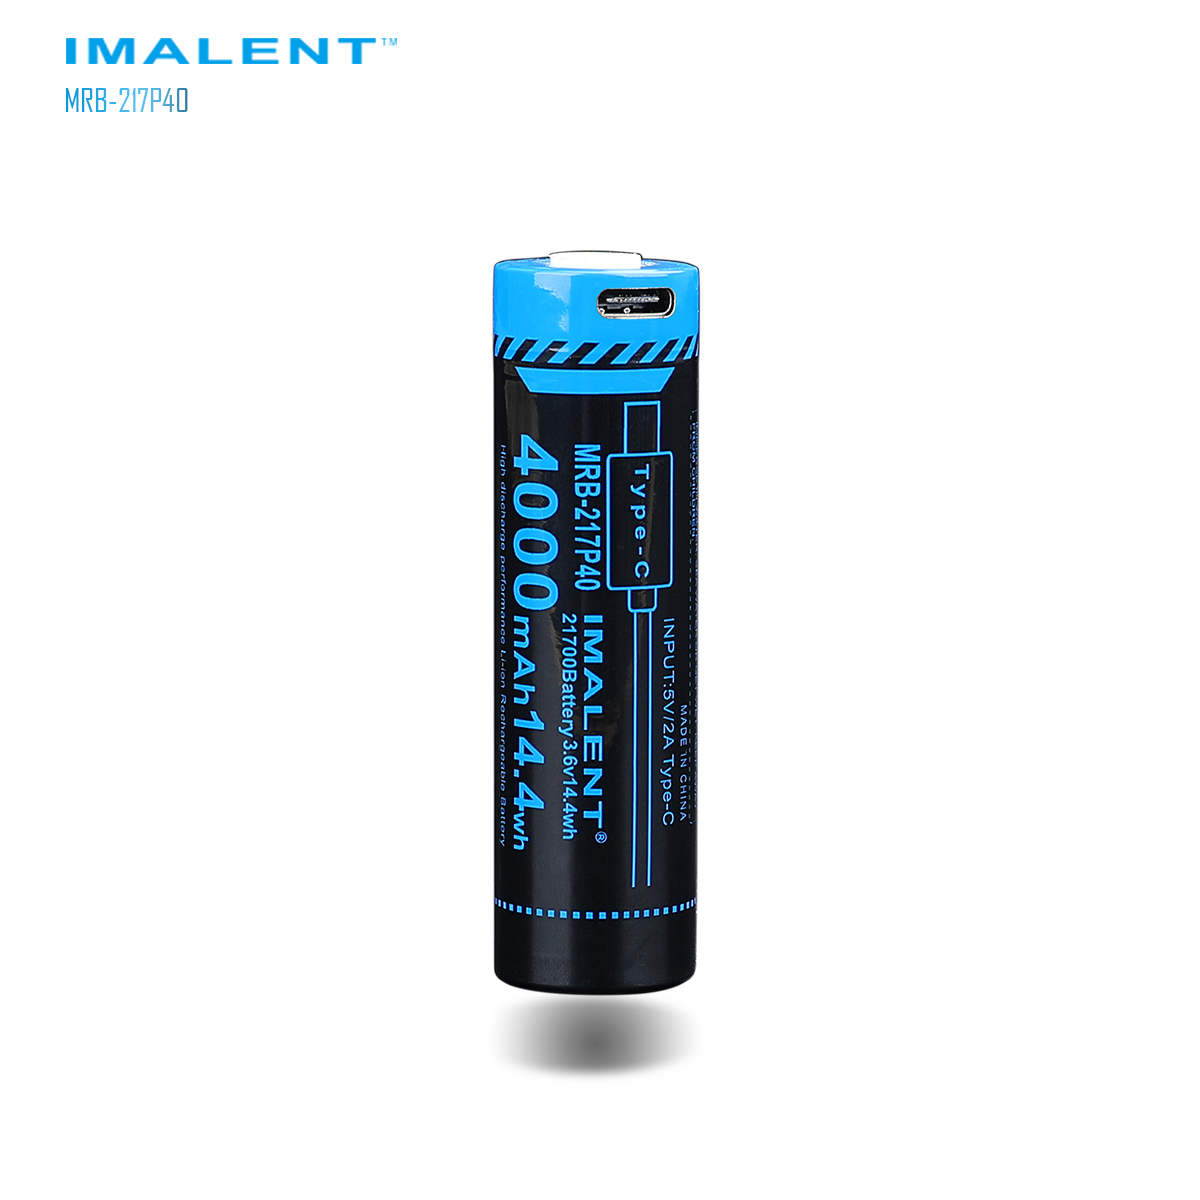 imalent battery